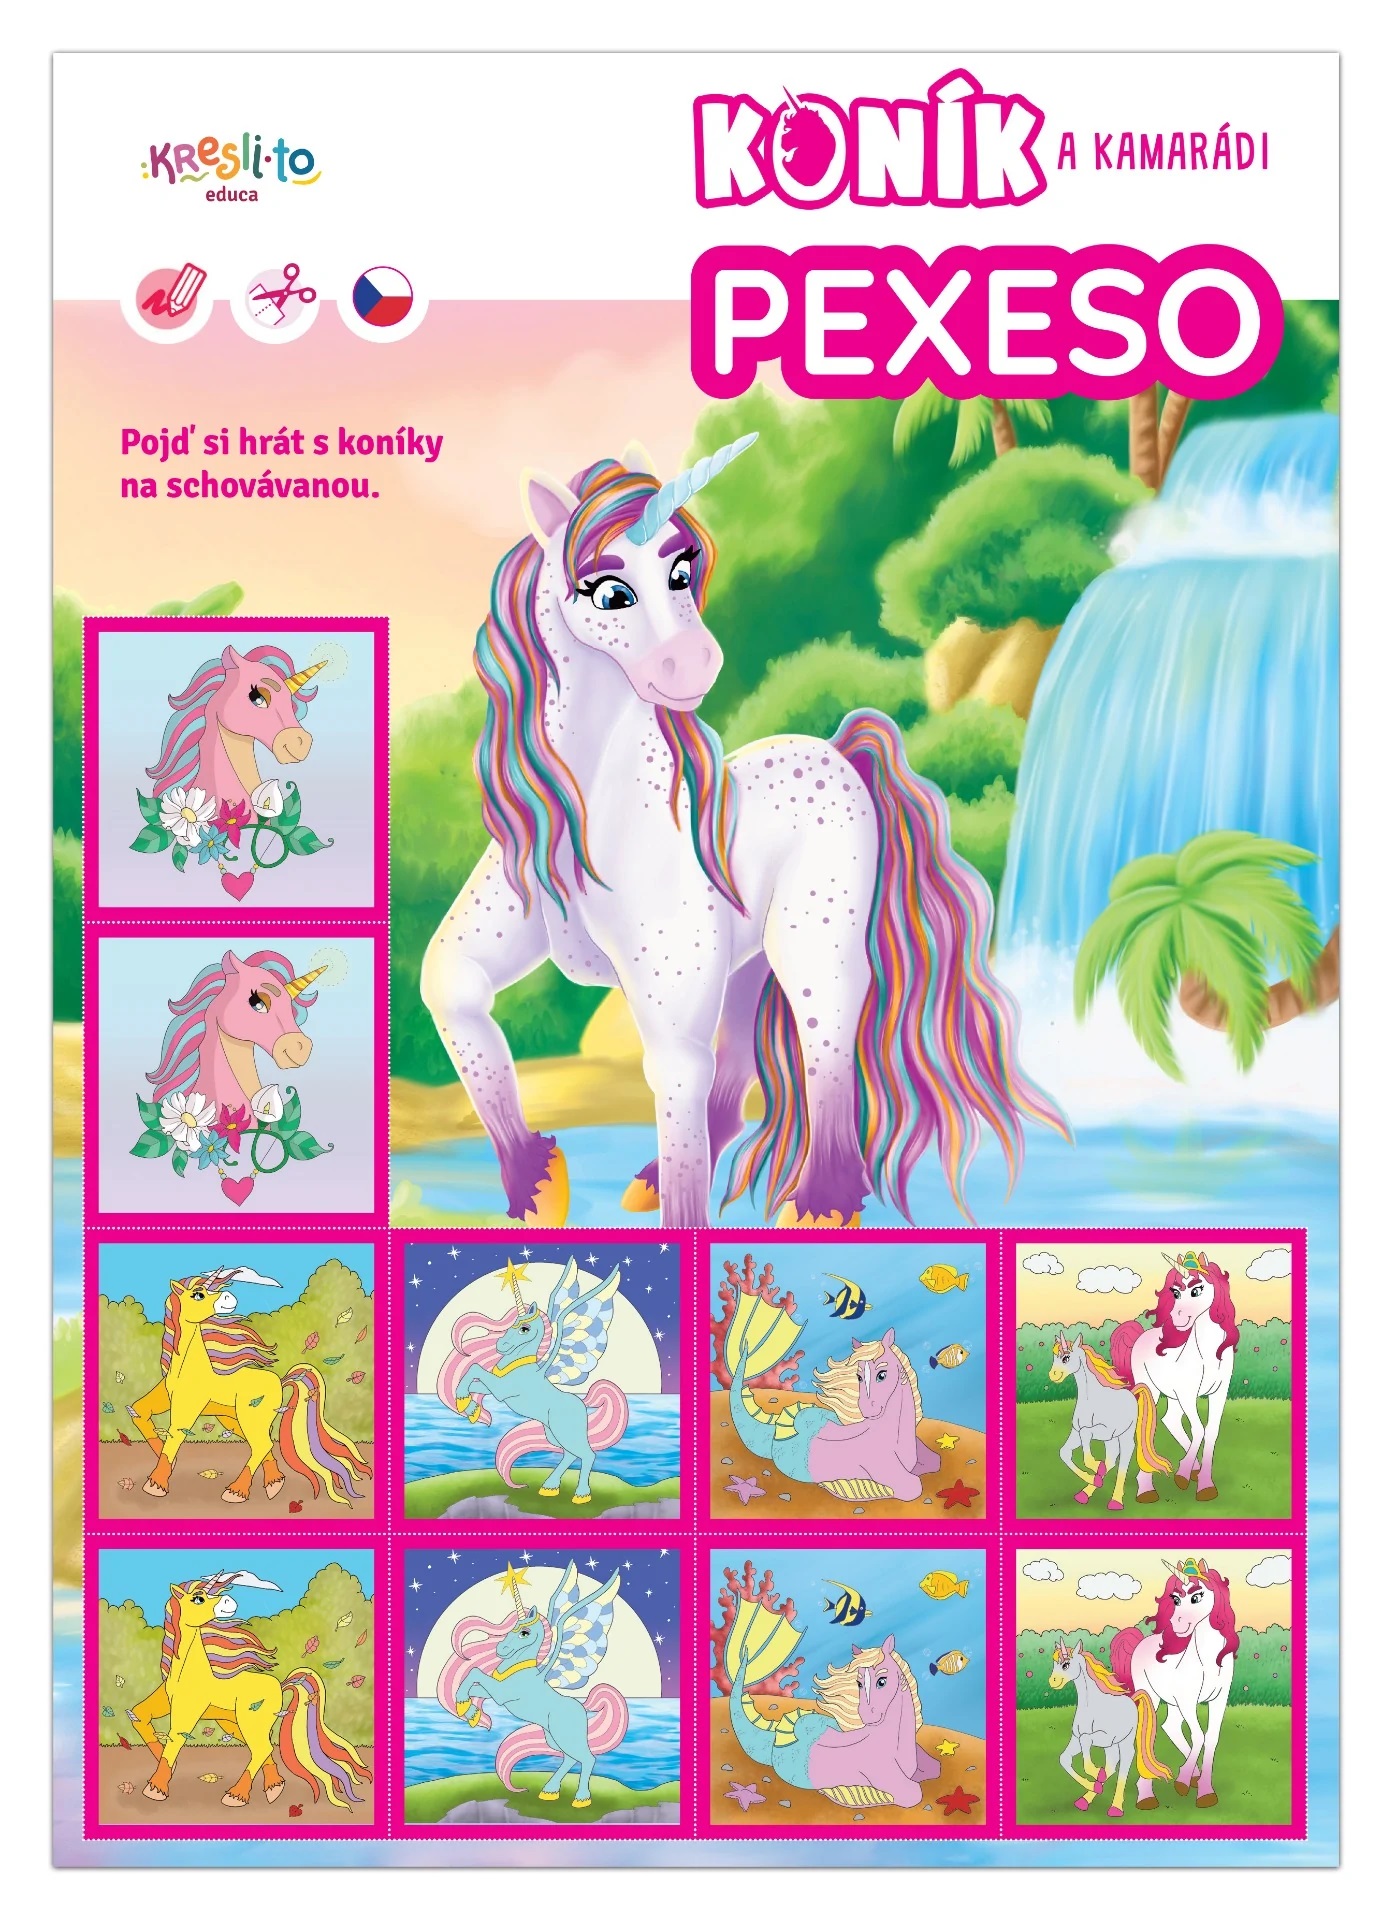 Pexeso - Koně a kamarád